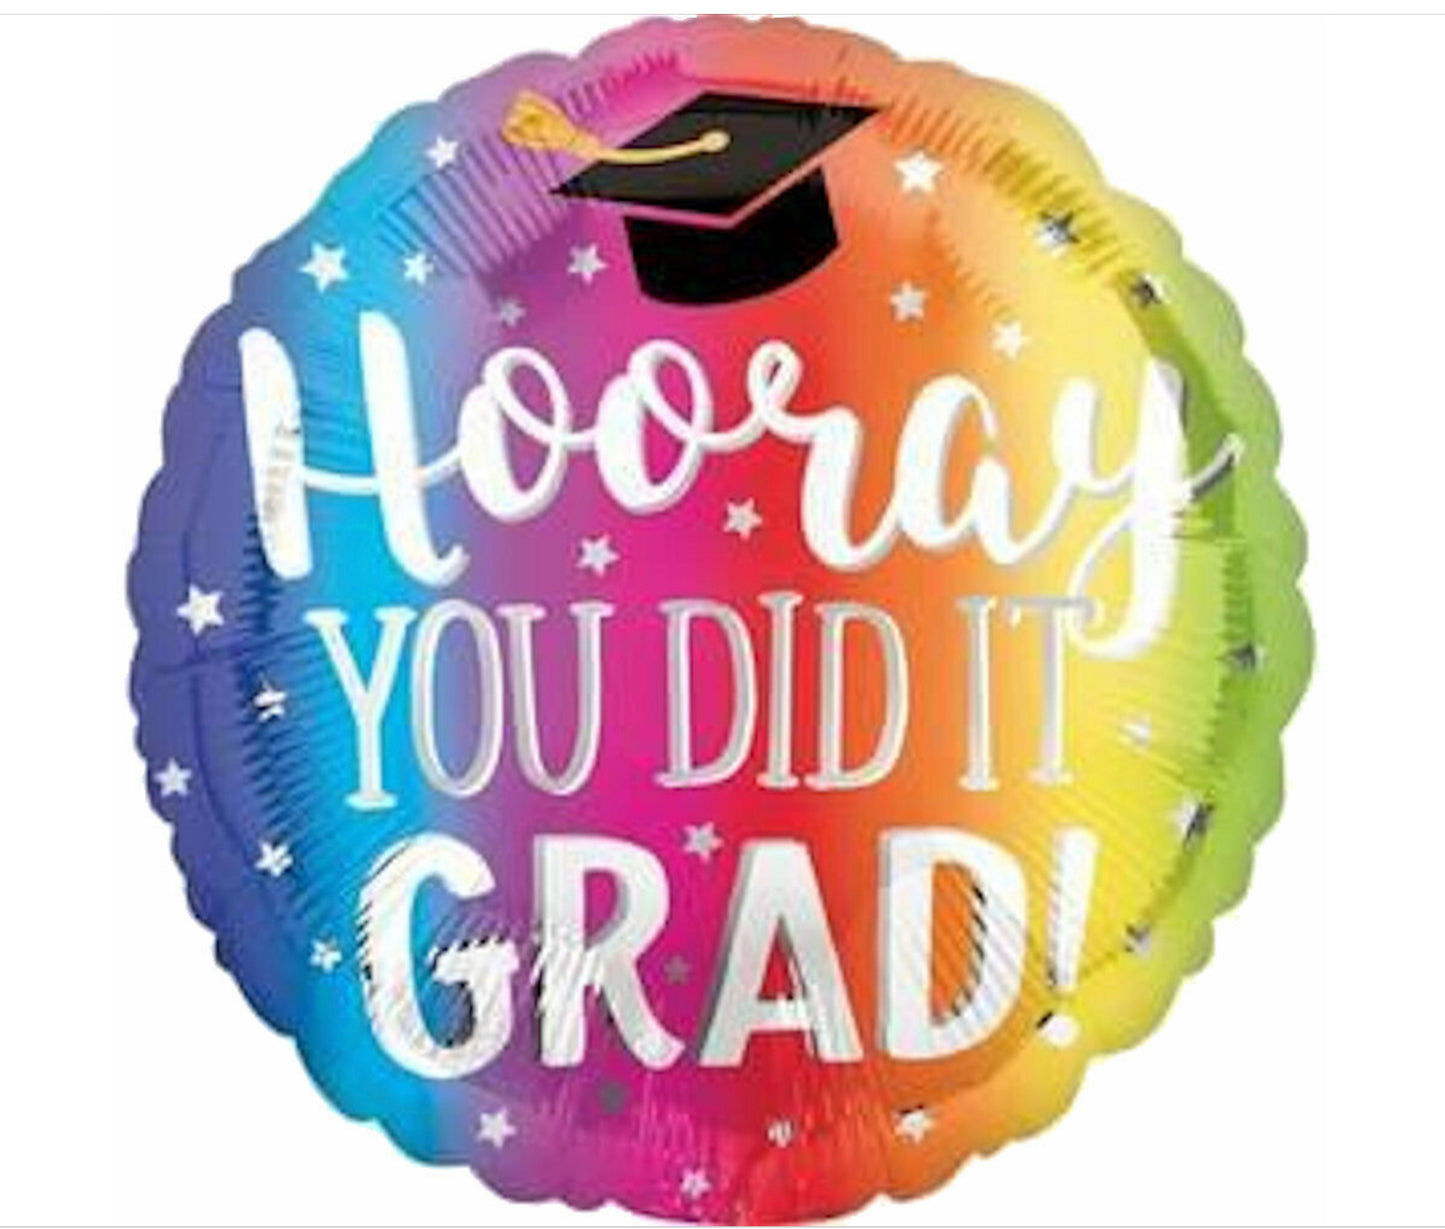 Hooray You Did It Grad! Foil Balloon